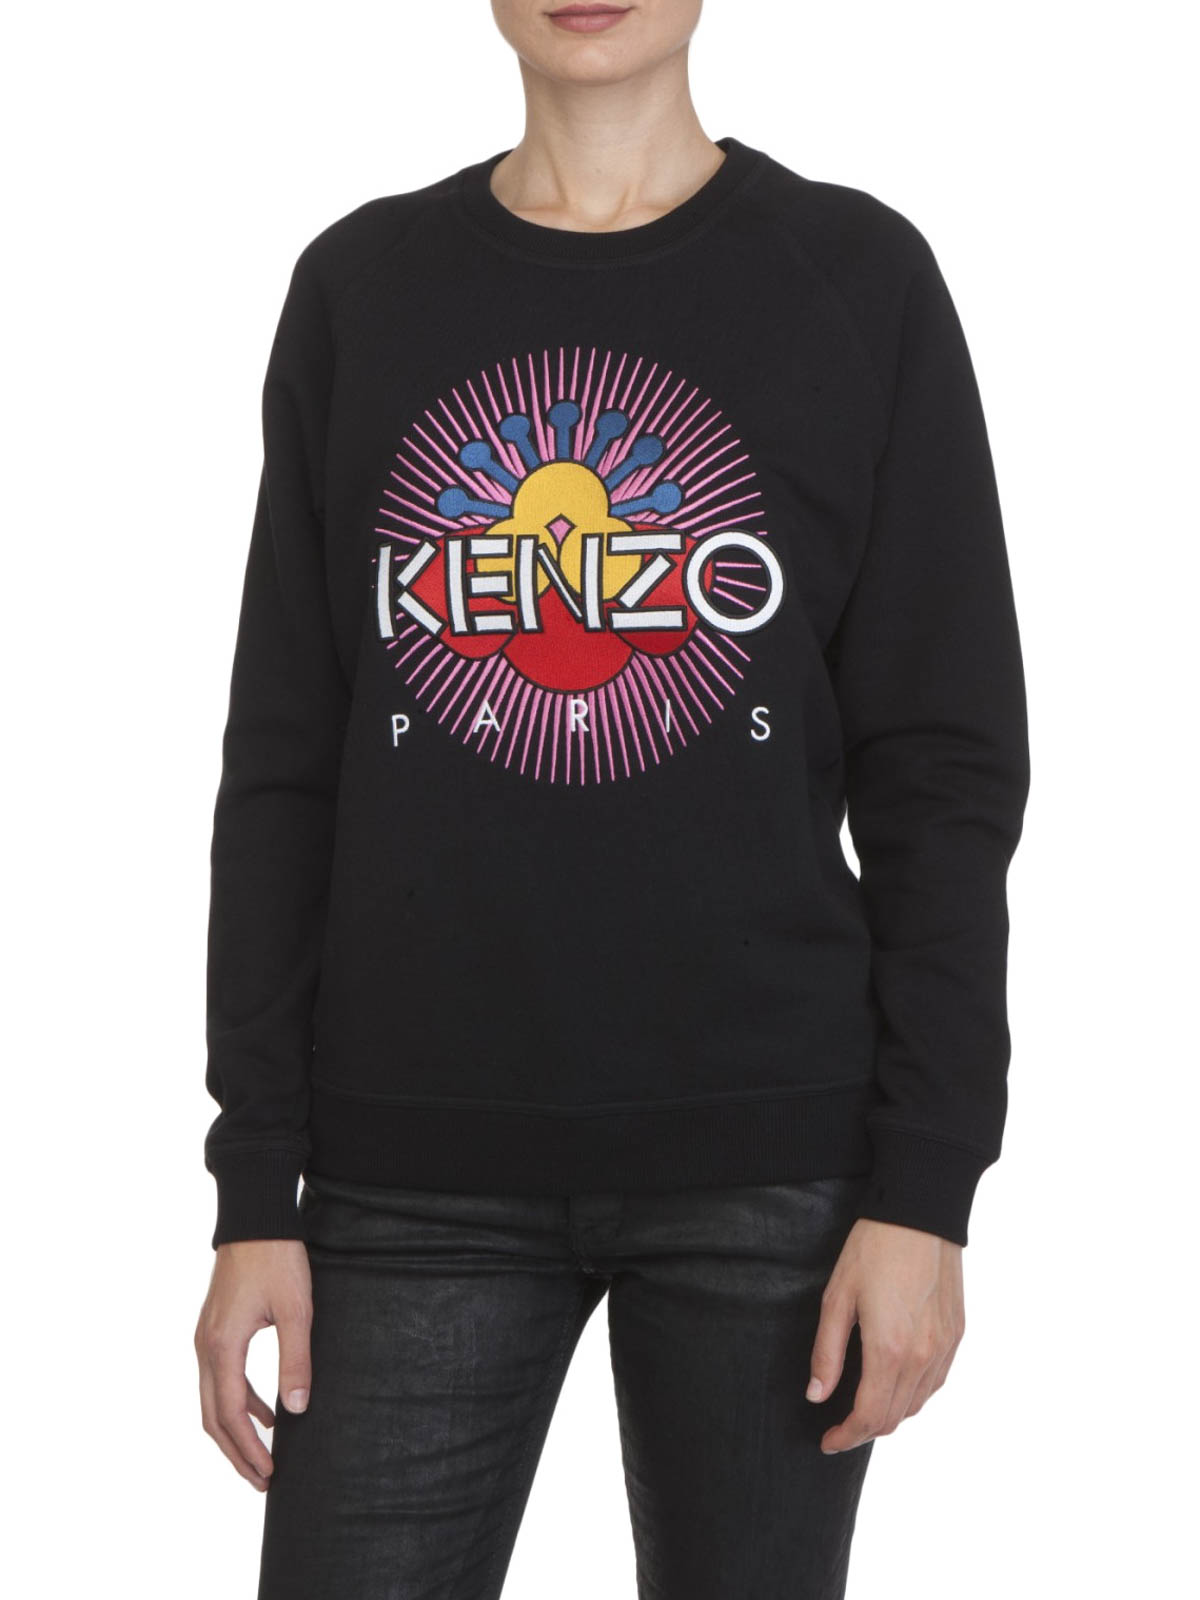 Sweatshirts & Sweaters Kenzo - Tanami Flower sweatshirt 